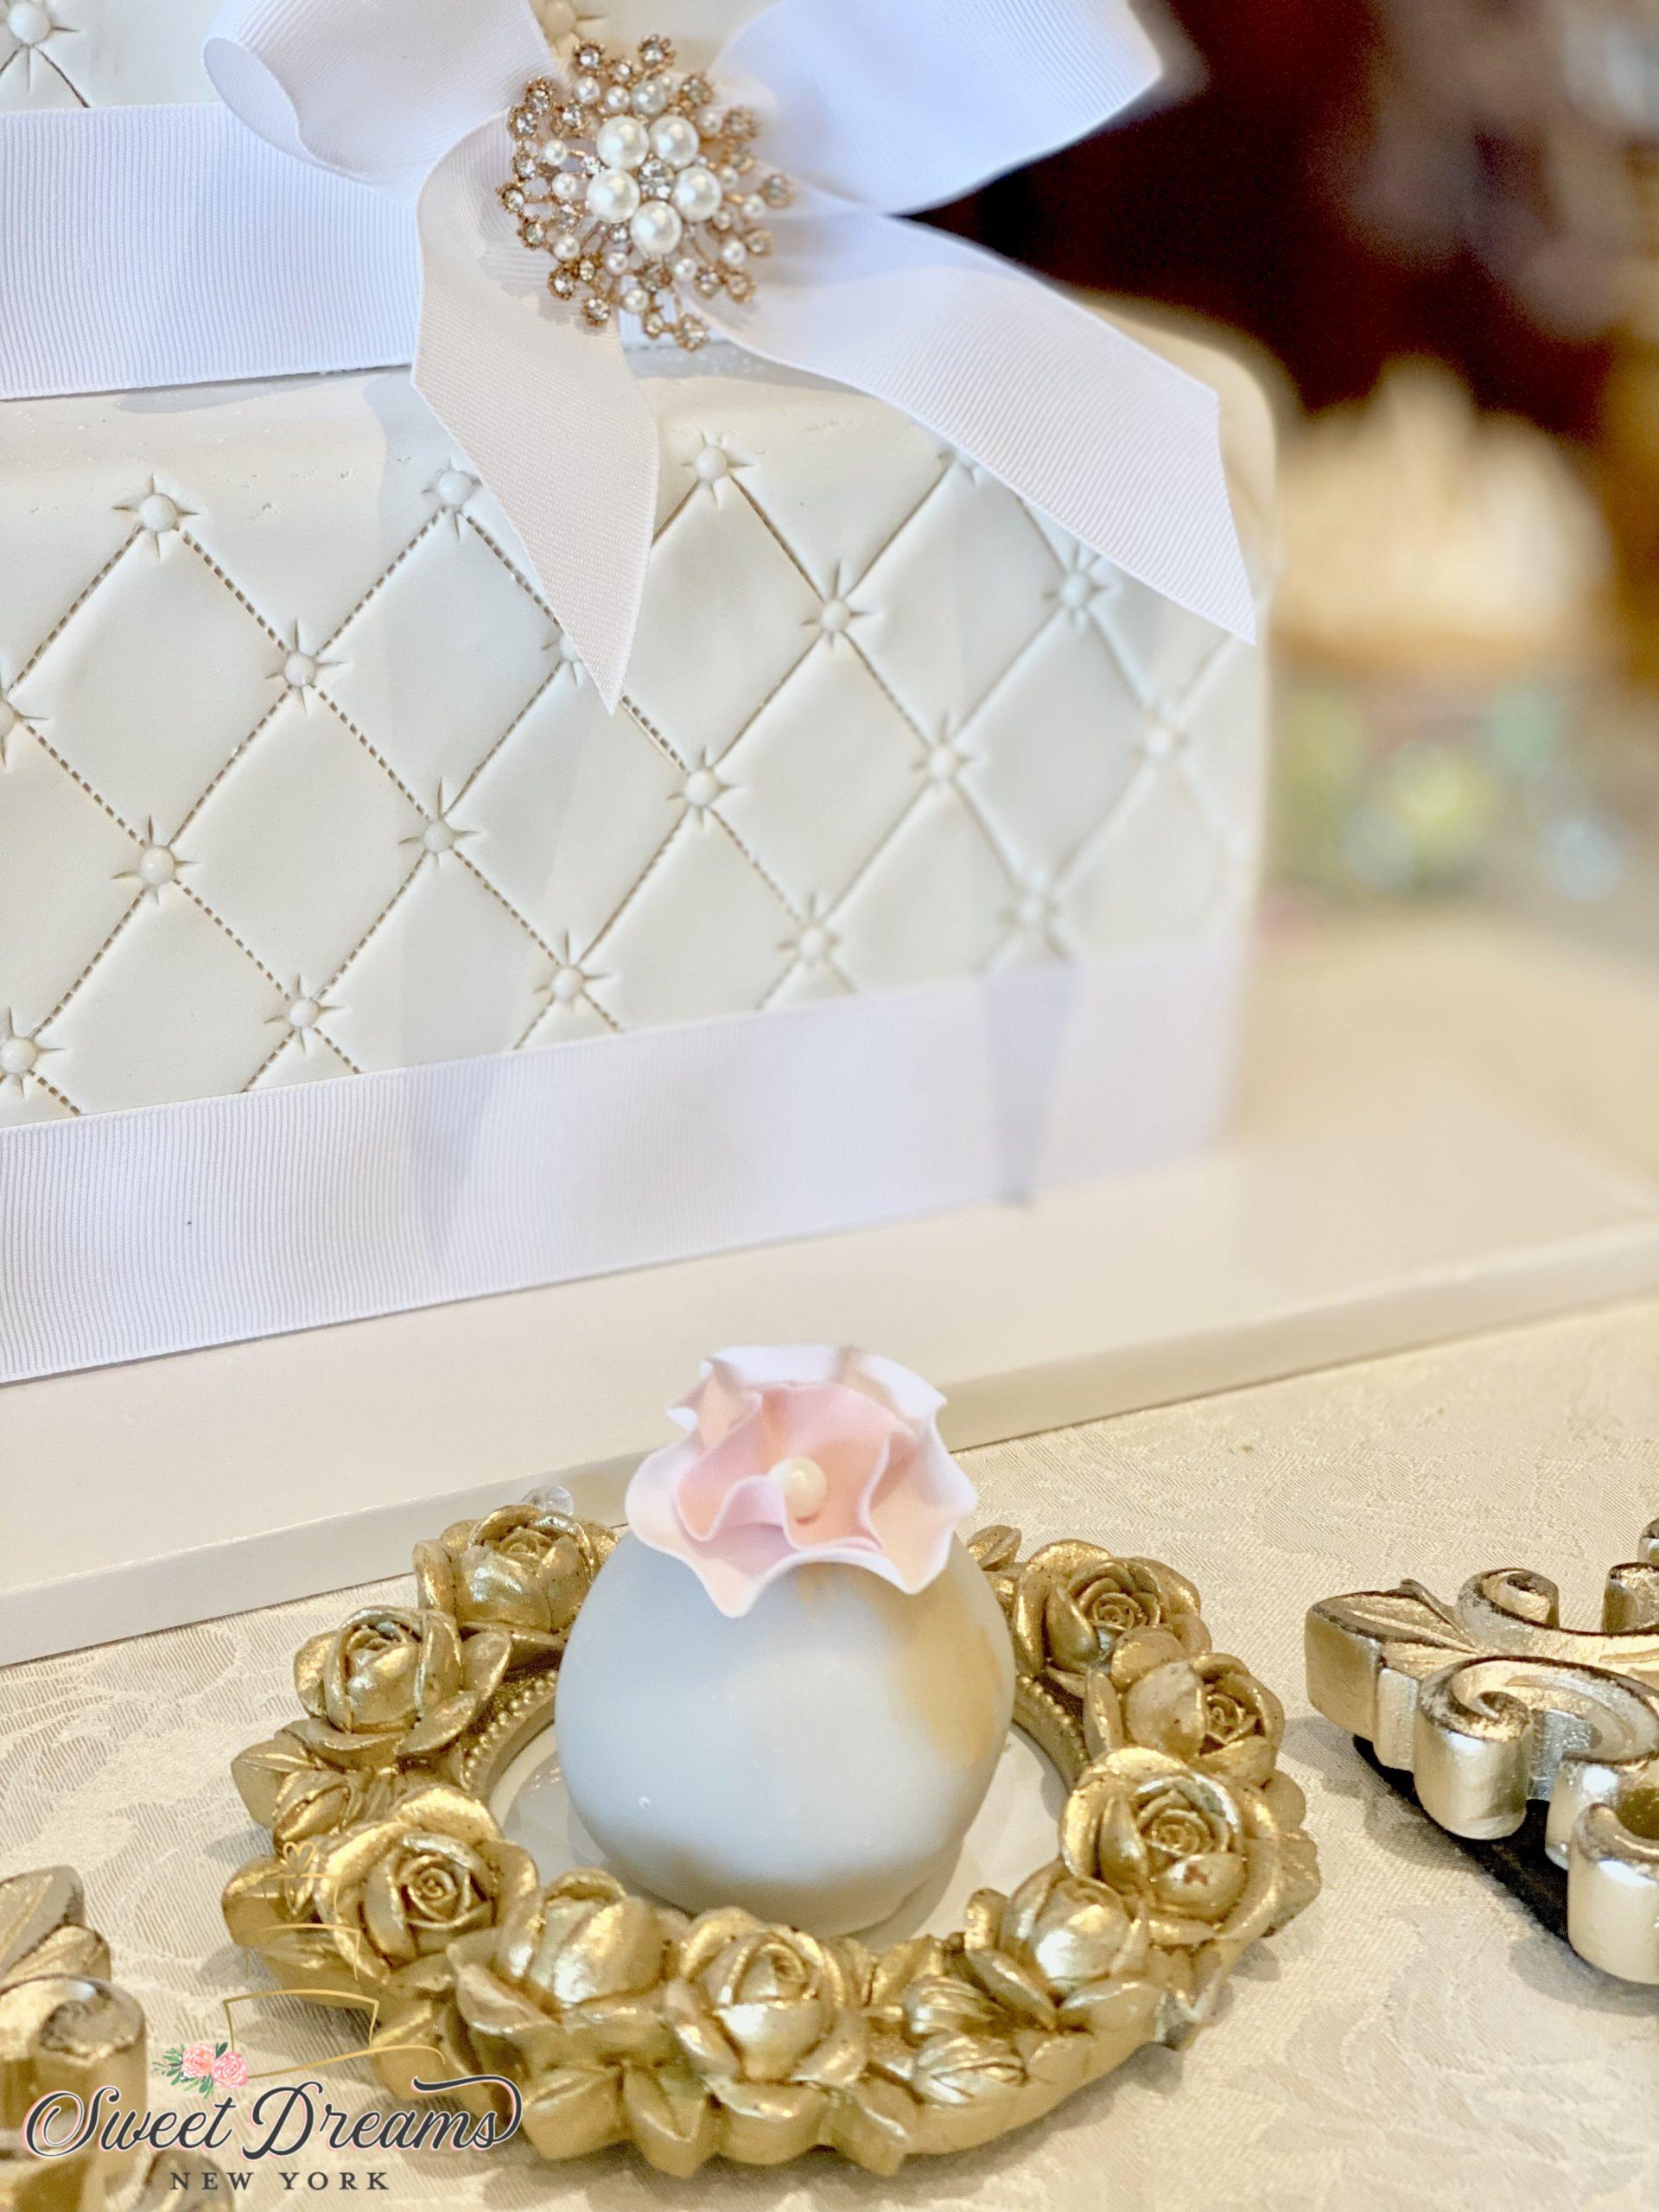 Elegant Rustic white dessert table wedding cake bridal shower cupcakes cake pops gold and white wedding